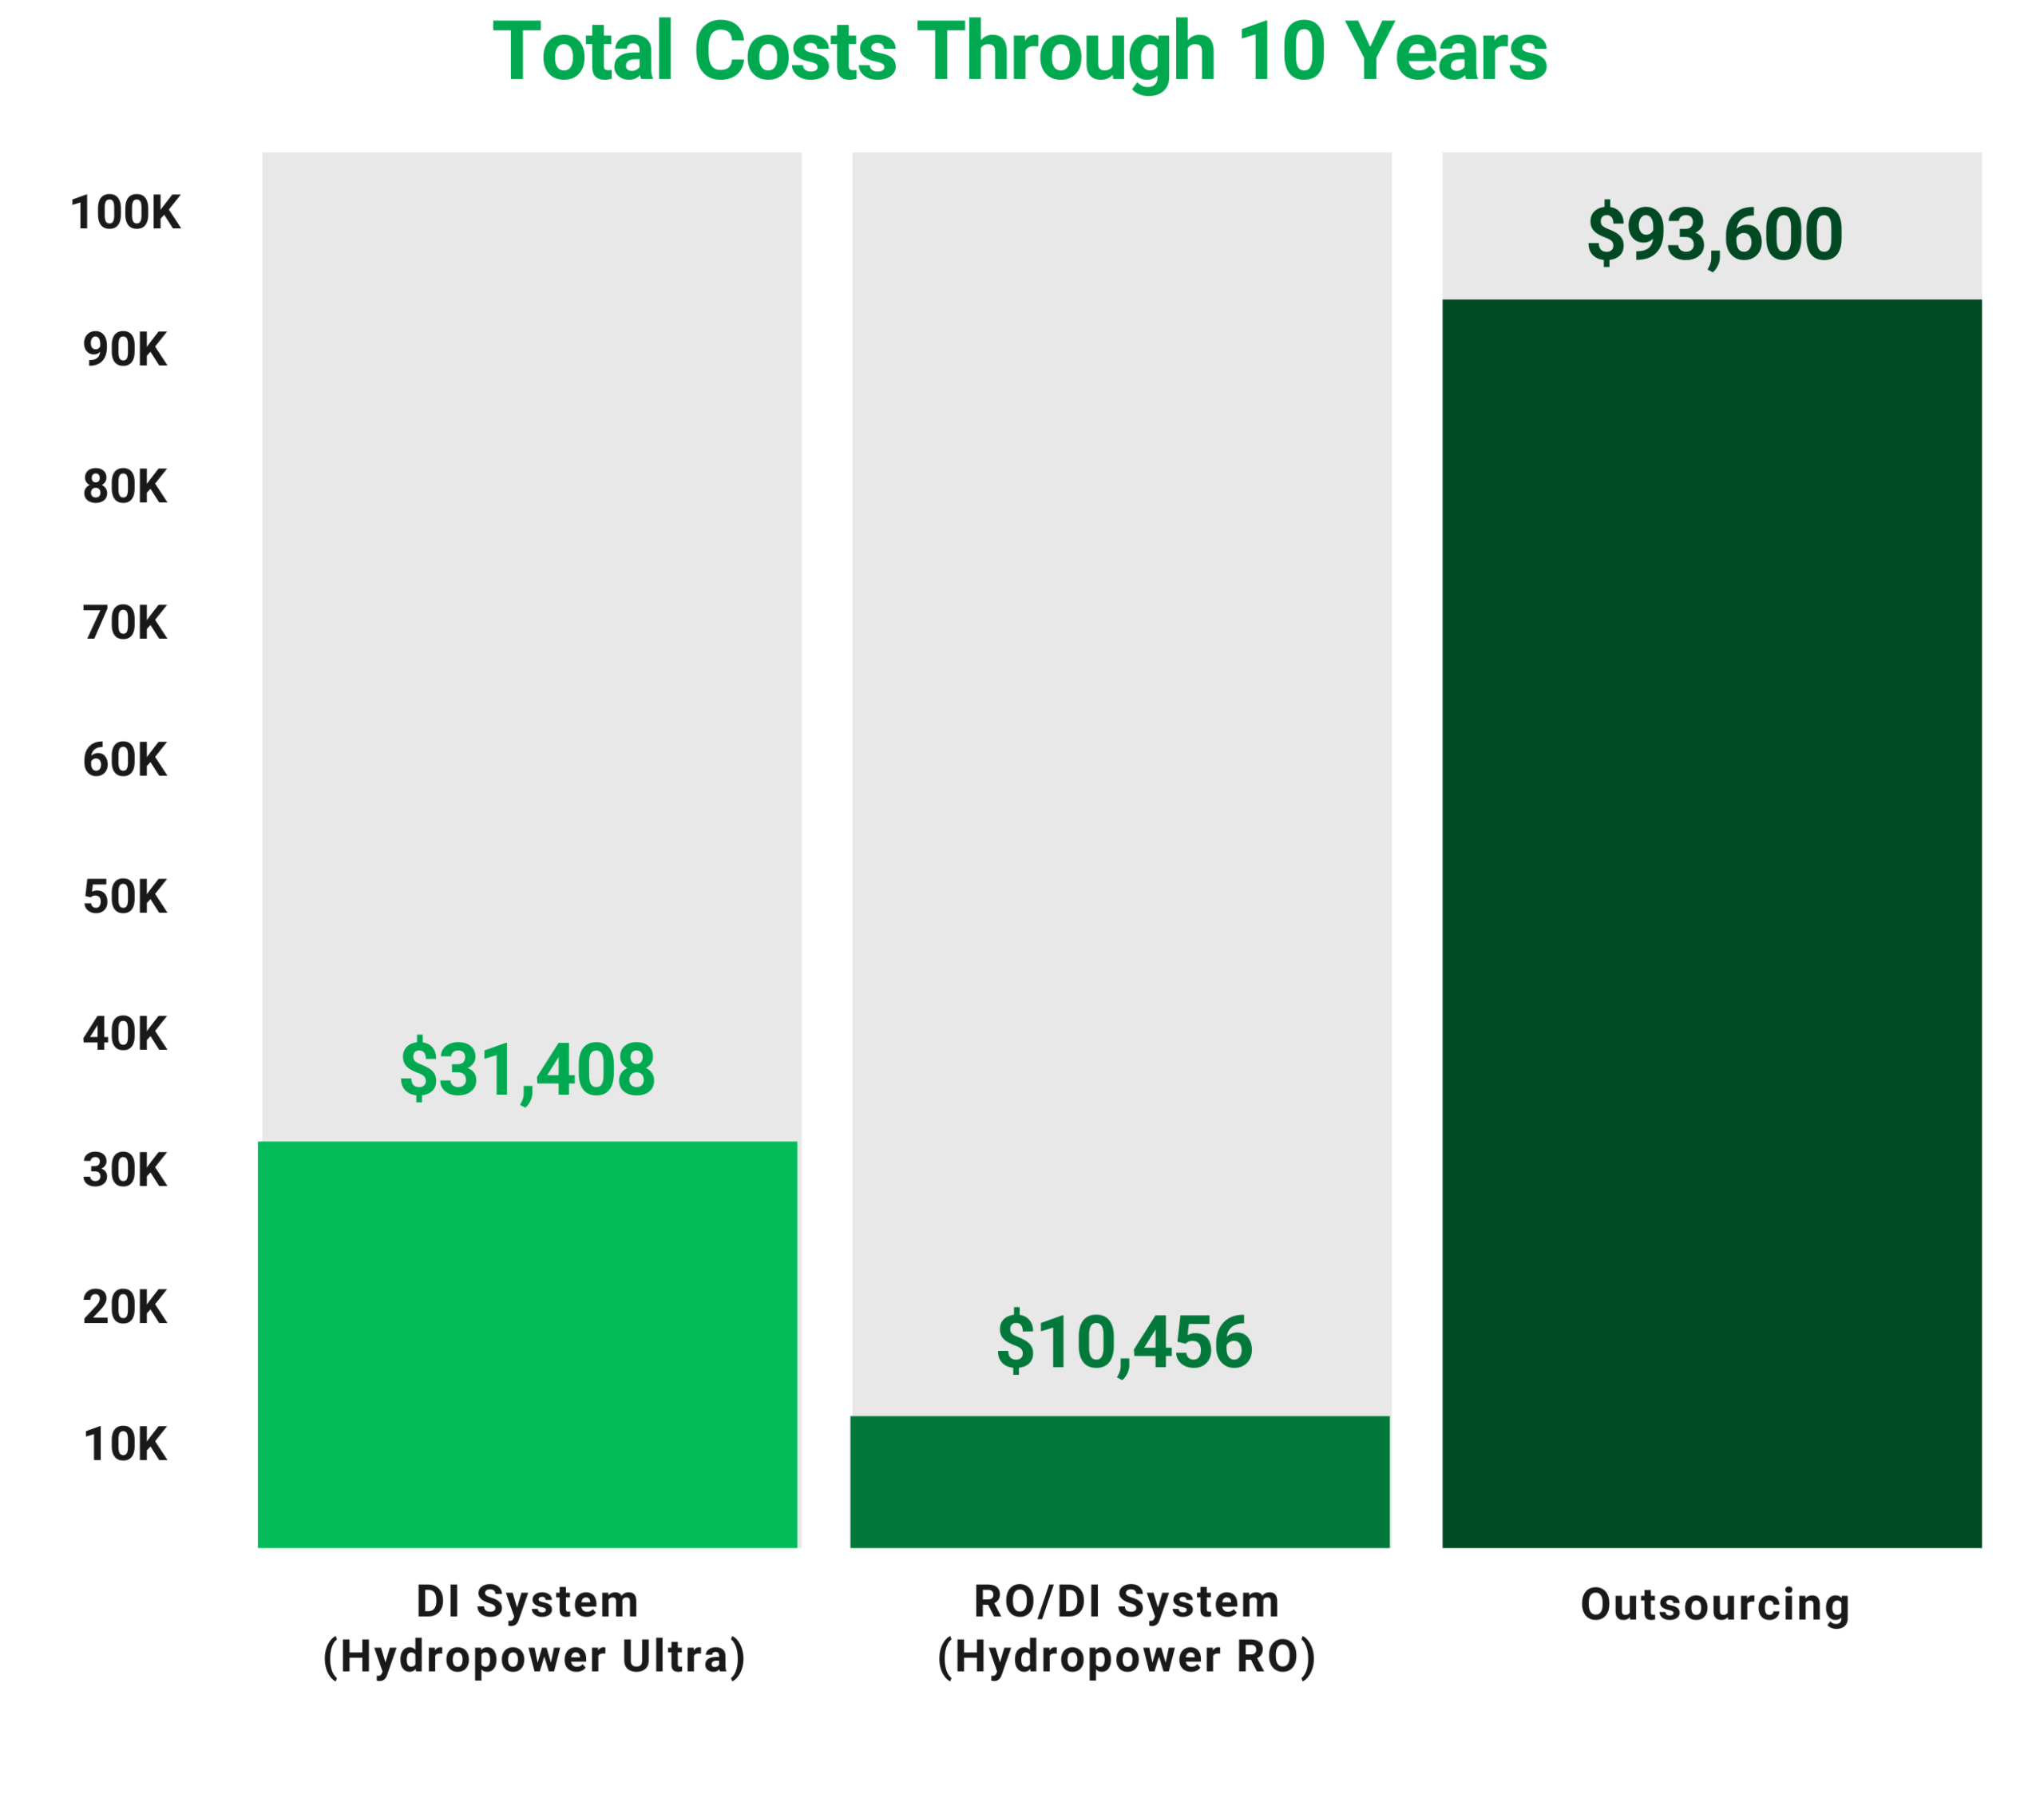 Total Costs Through 10 Years, Scenario 1